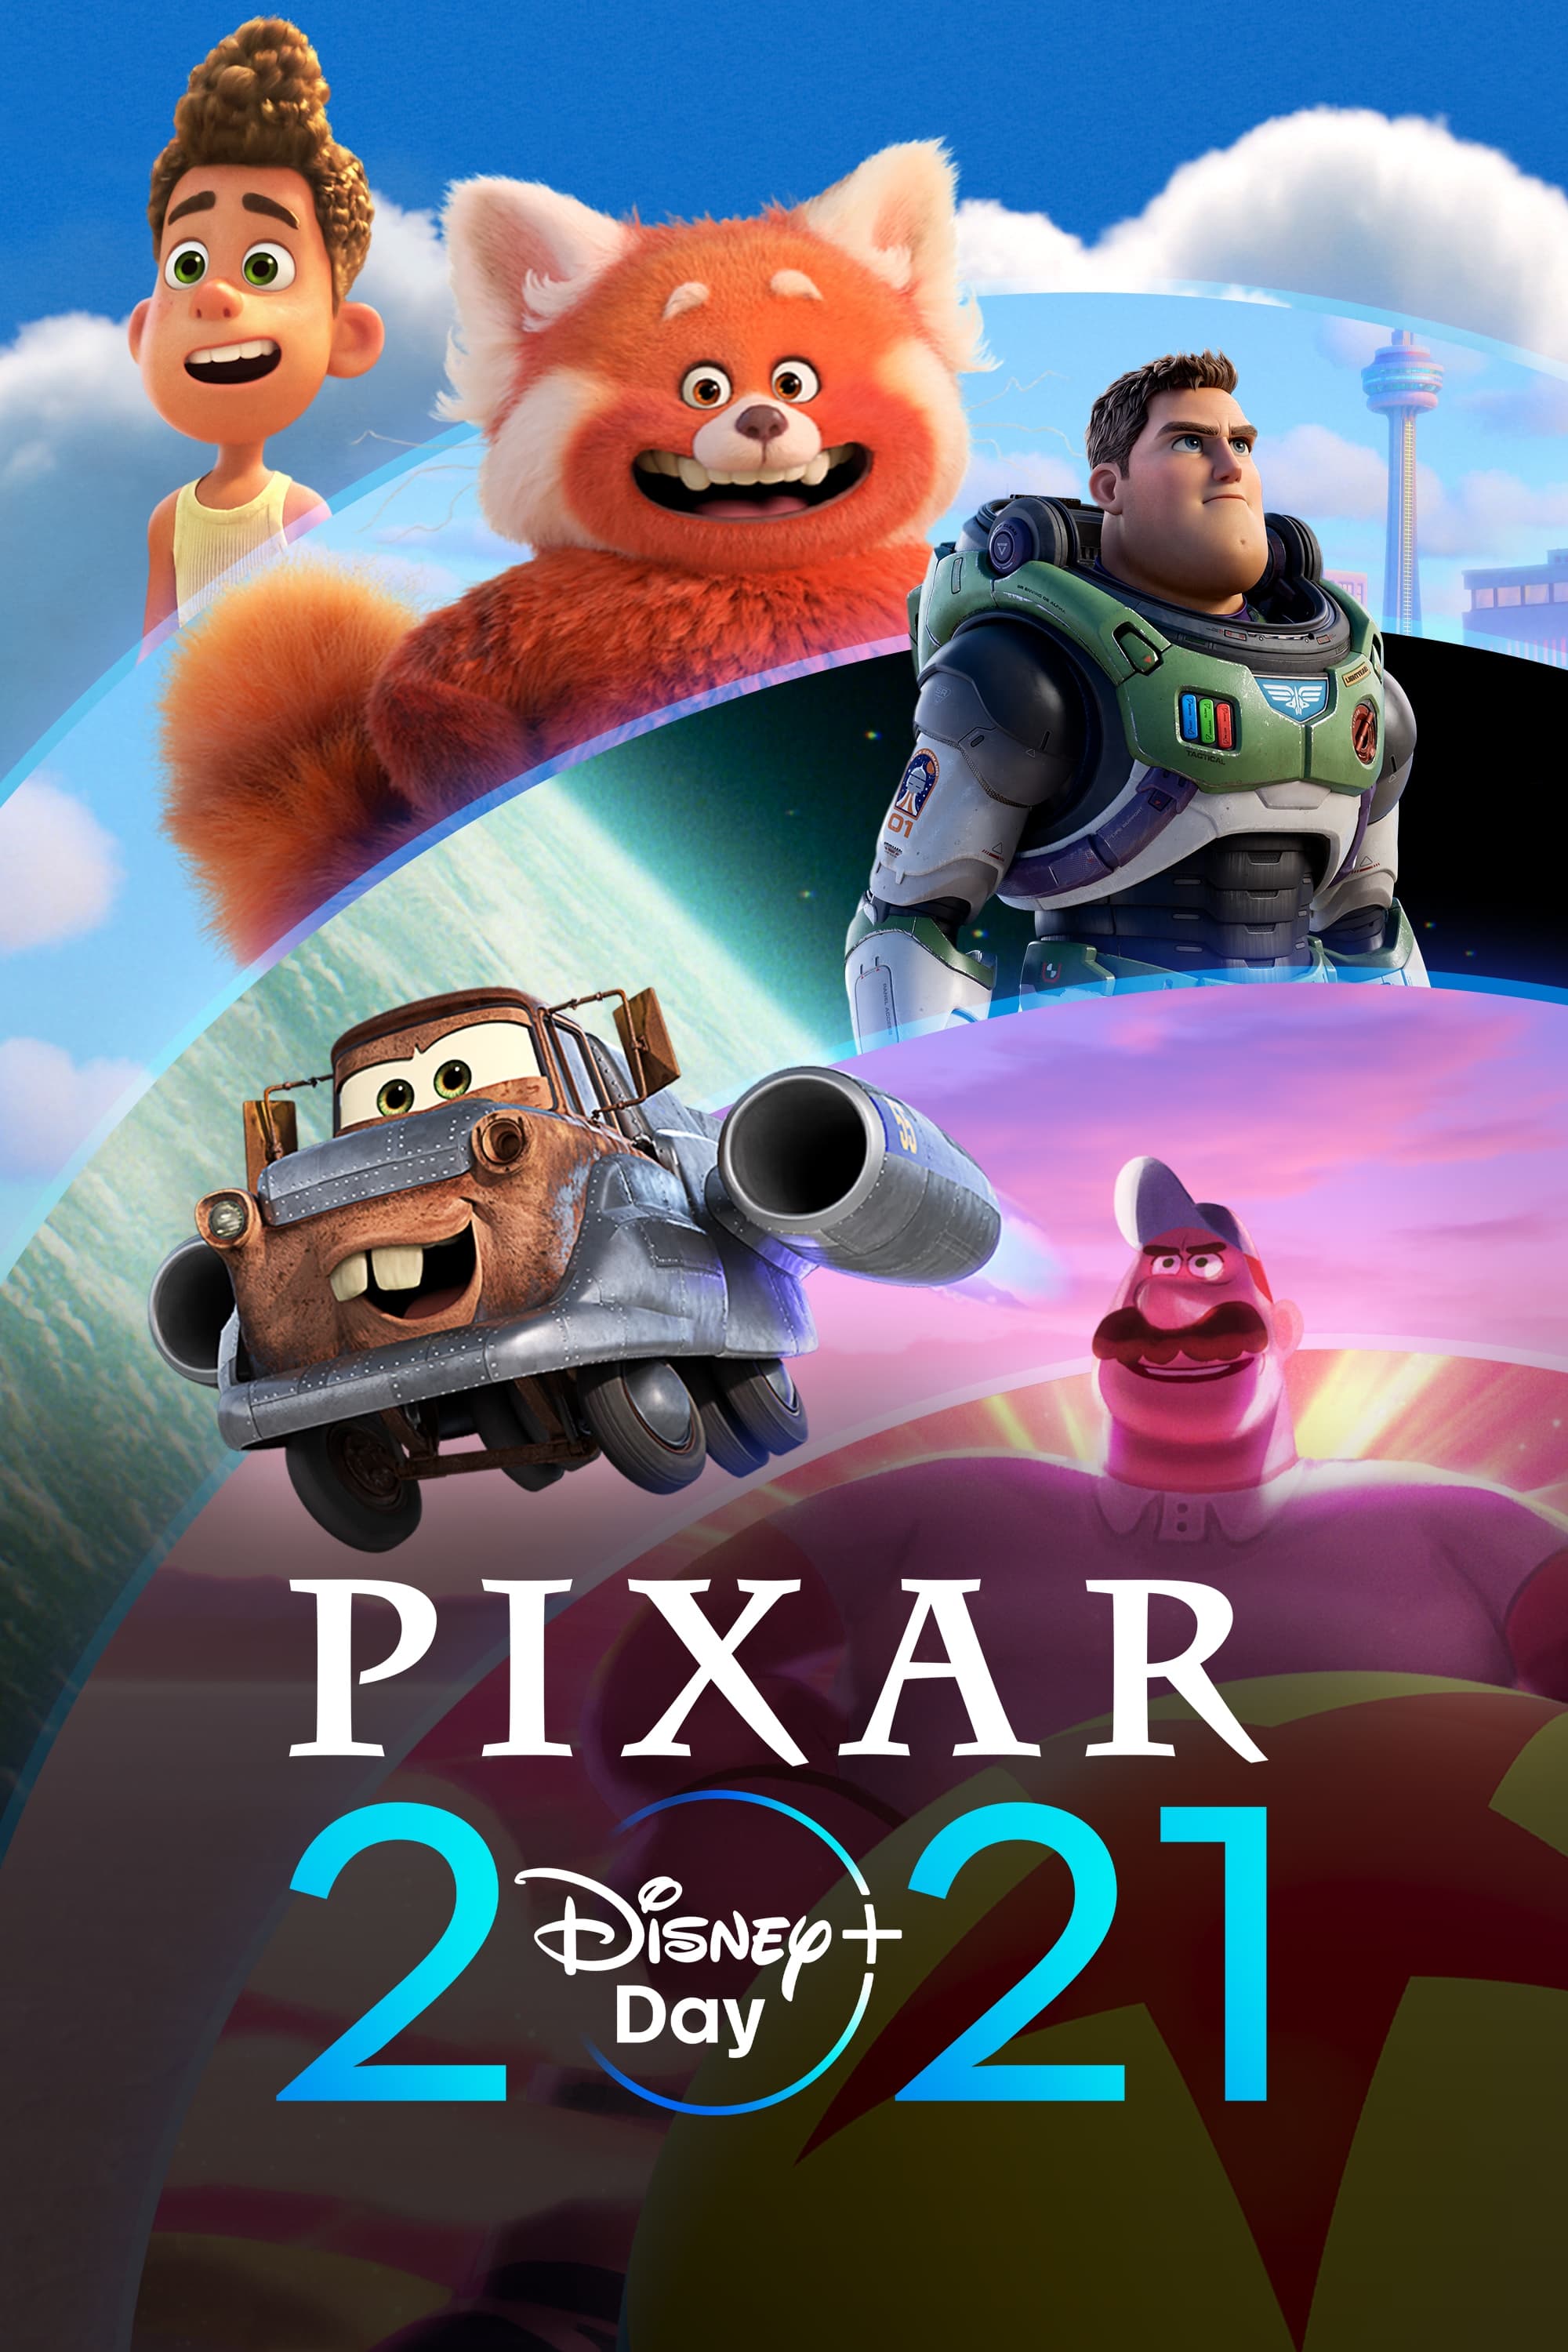 Pixar 2021 Disney+ Day Special film